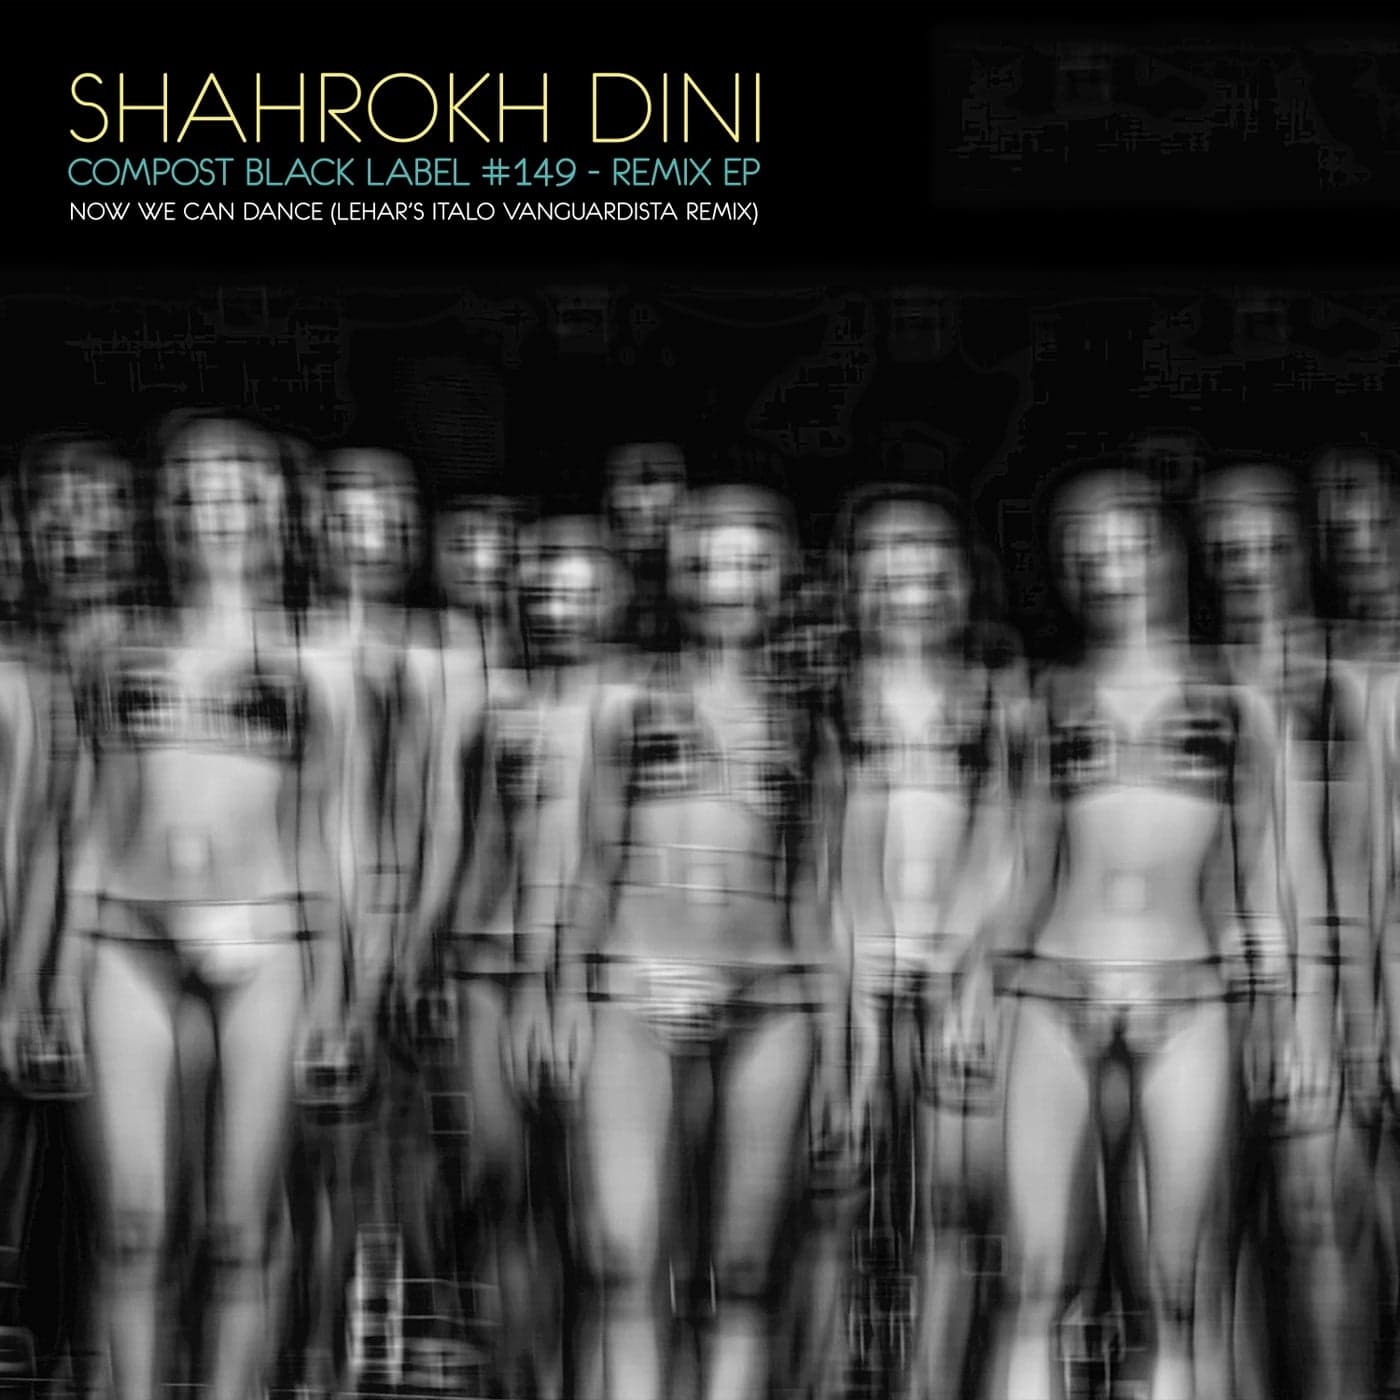 Download Shahrokh Dini, Illinois - Now We Can Dance - Lehar's Italo Vanguardista Remix on Electrobuzz